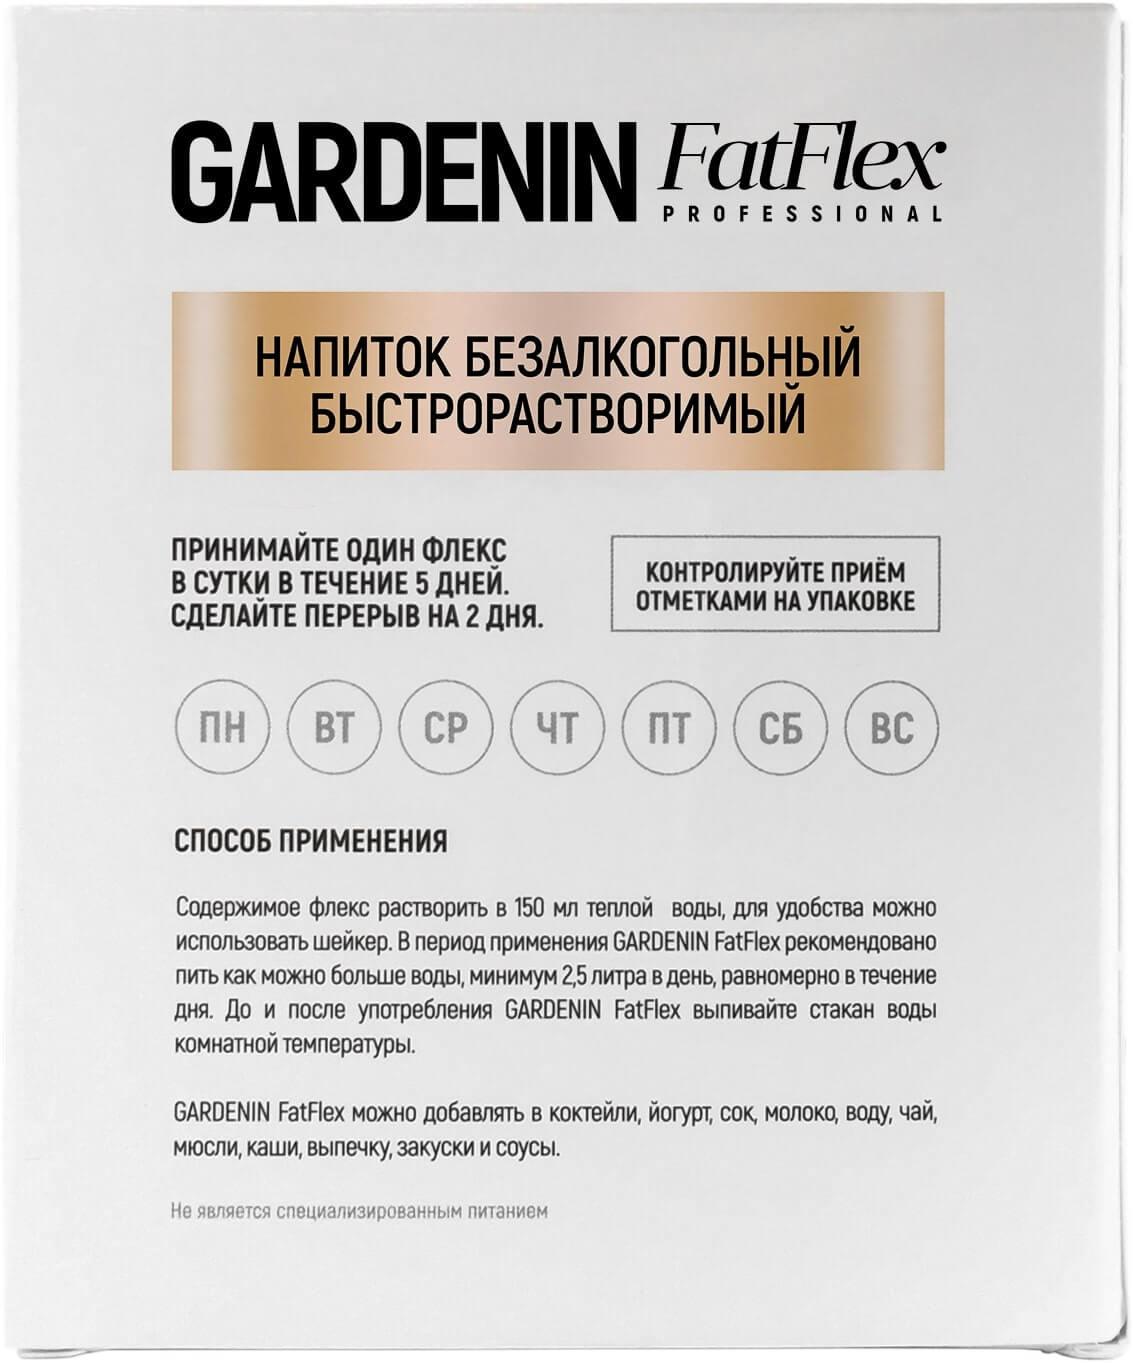 Цена gardenin fatflex 